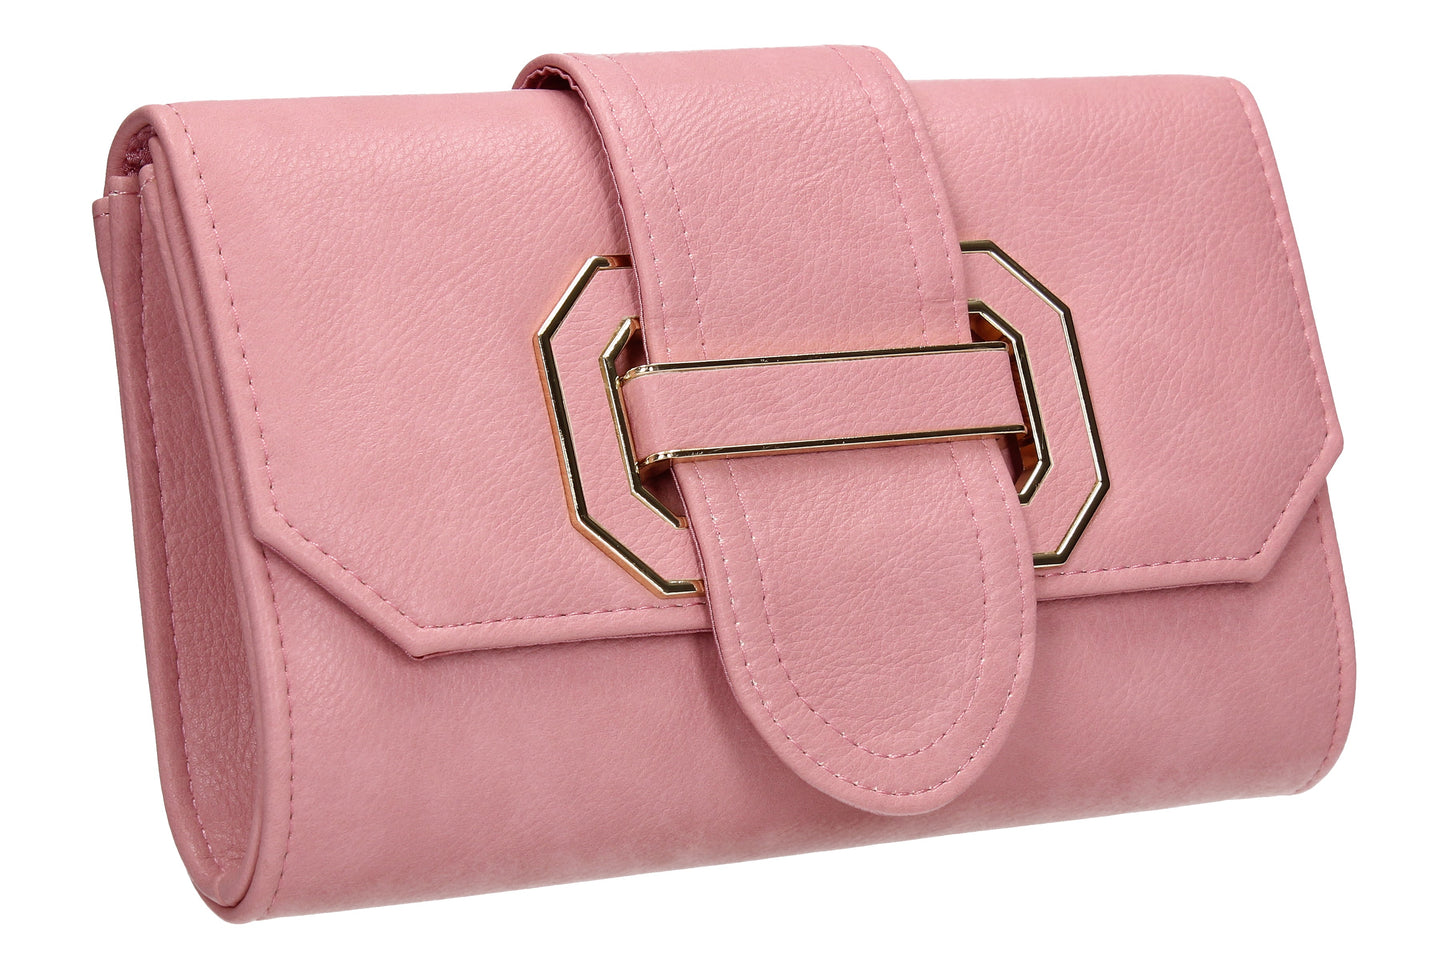 SWANKYSWANS Nora Fancy Clutch Bag Pink Cute Cheap Clutch Bag For Weddings School and Work